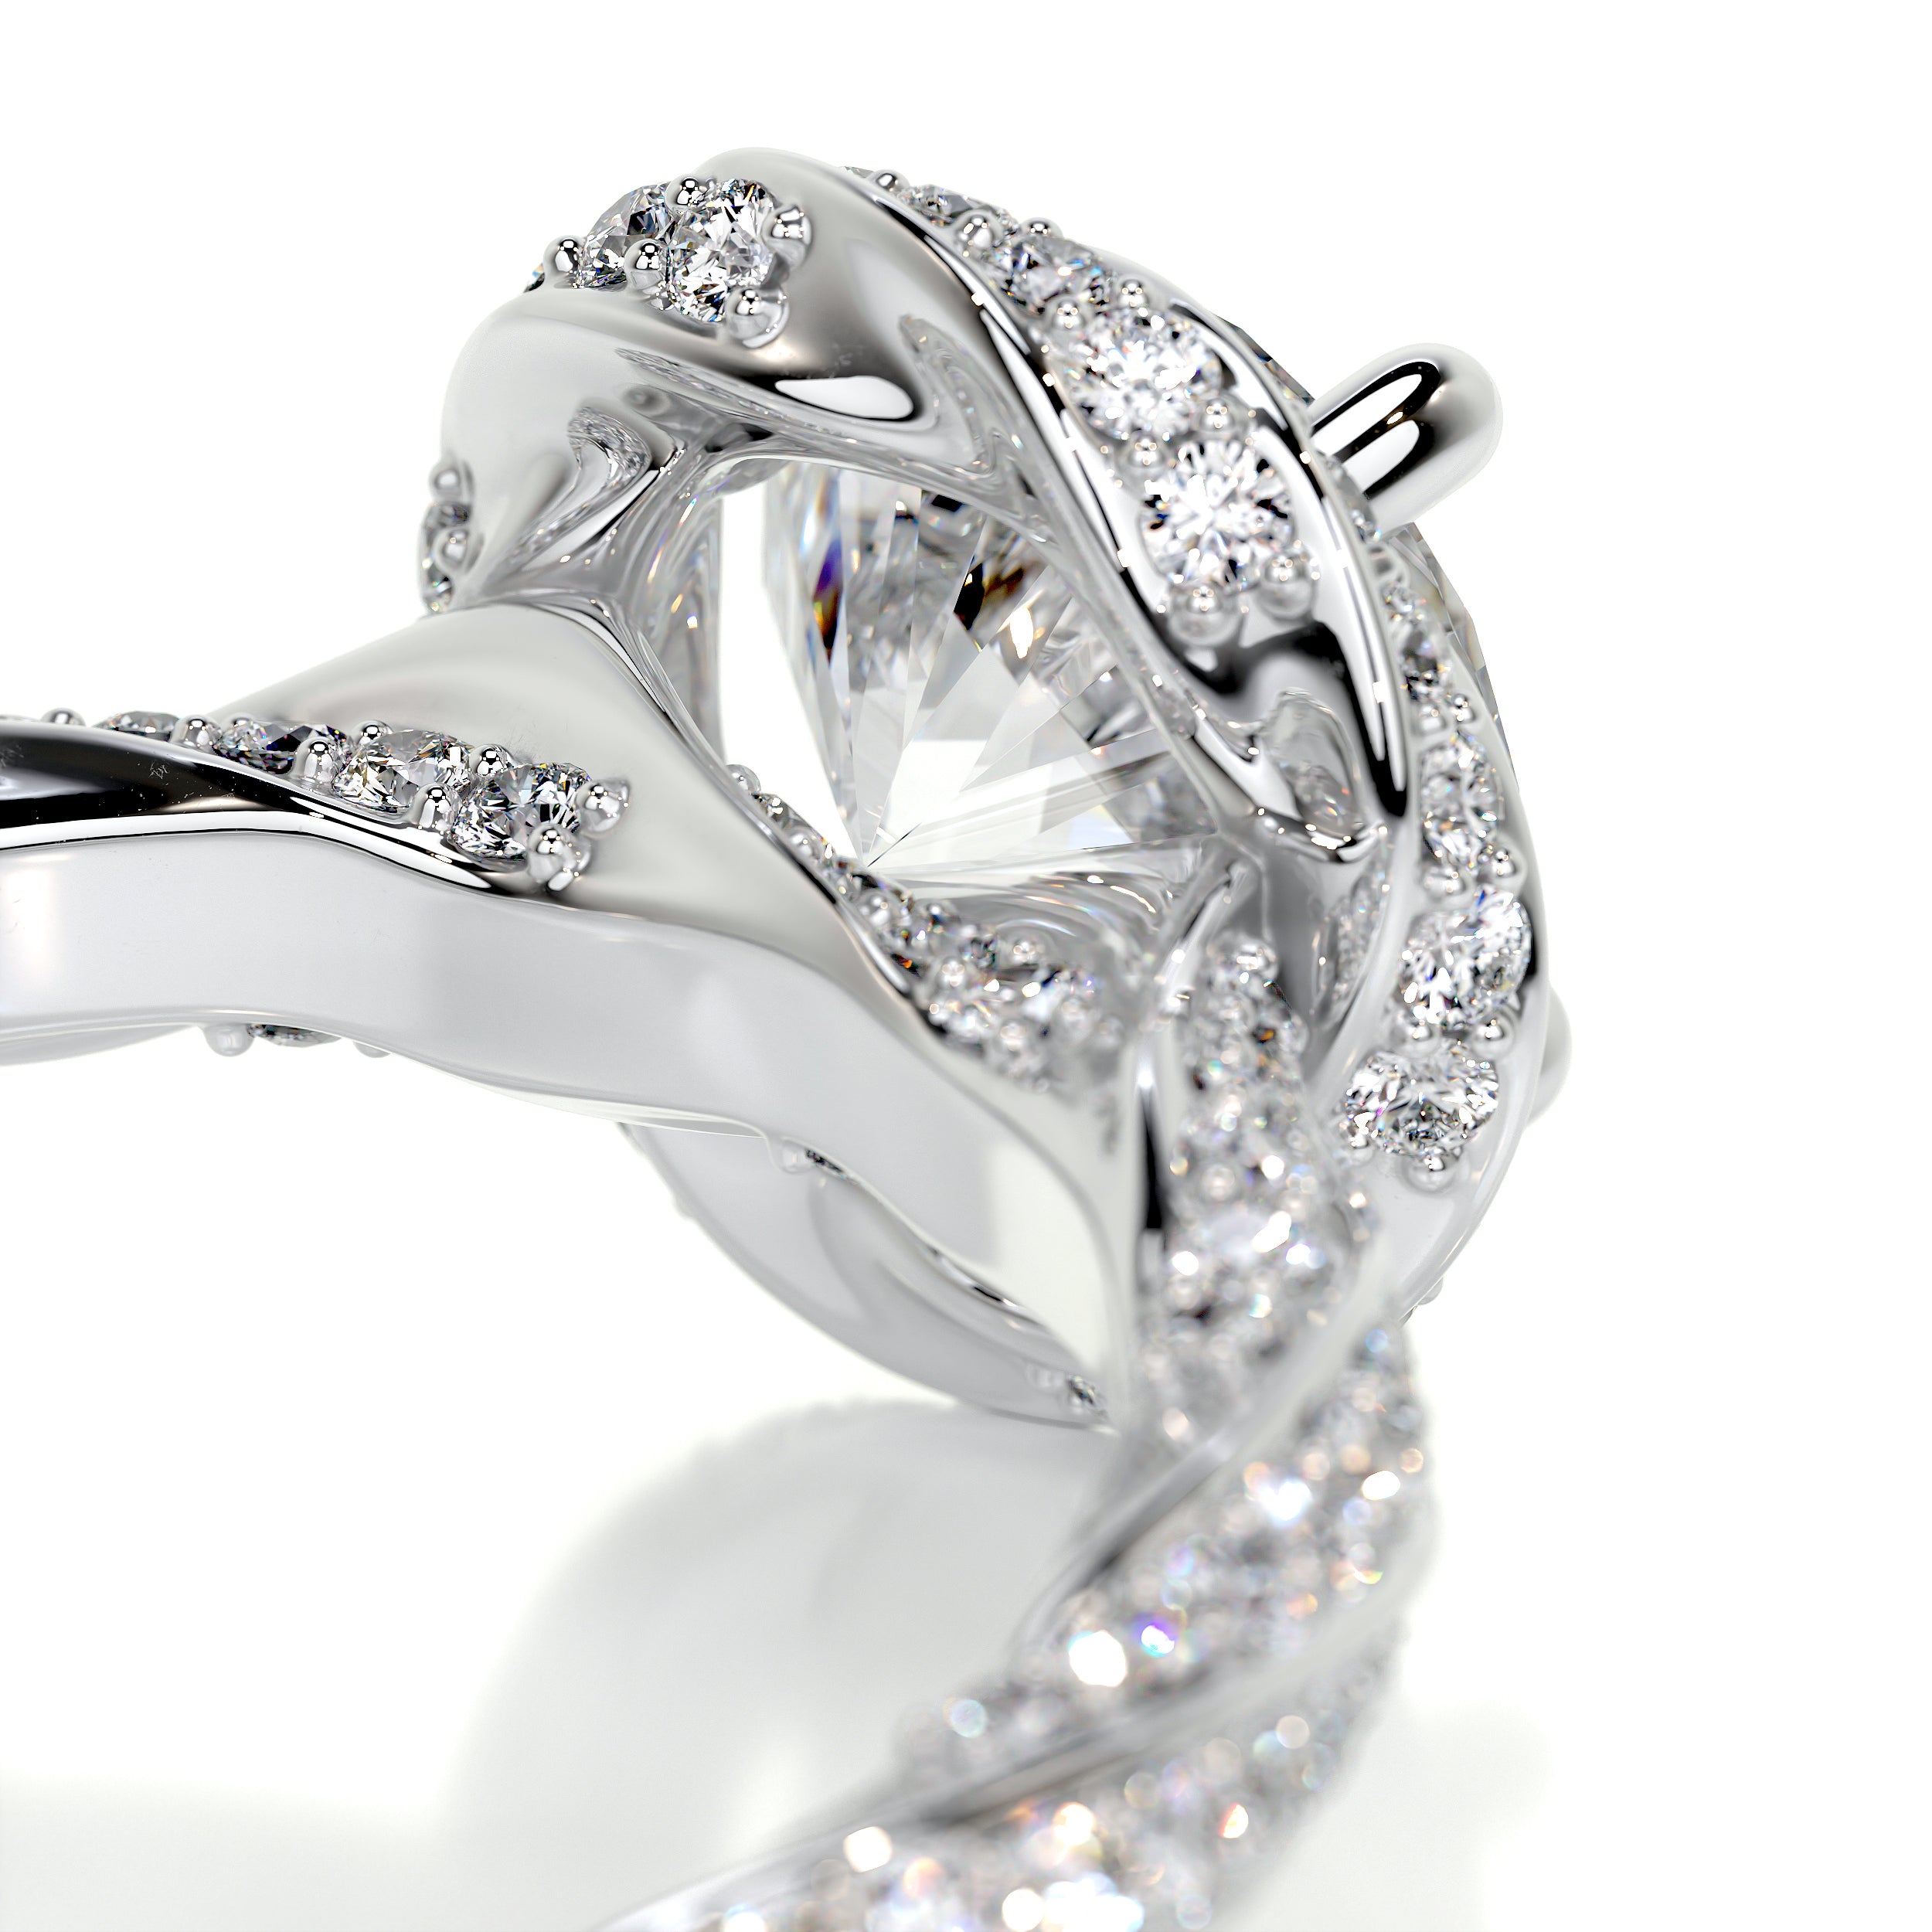 Joanne Diamond Engagement Ring   (1.50 Carat) -14K White Gold